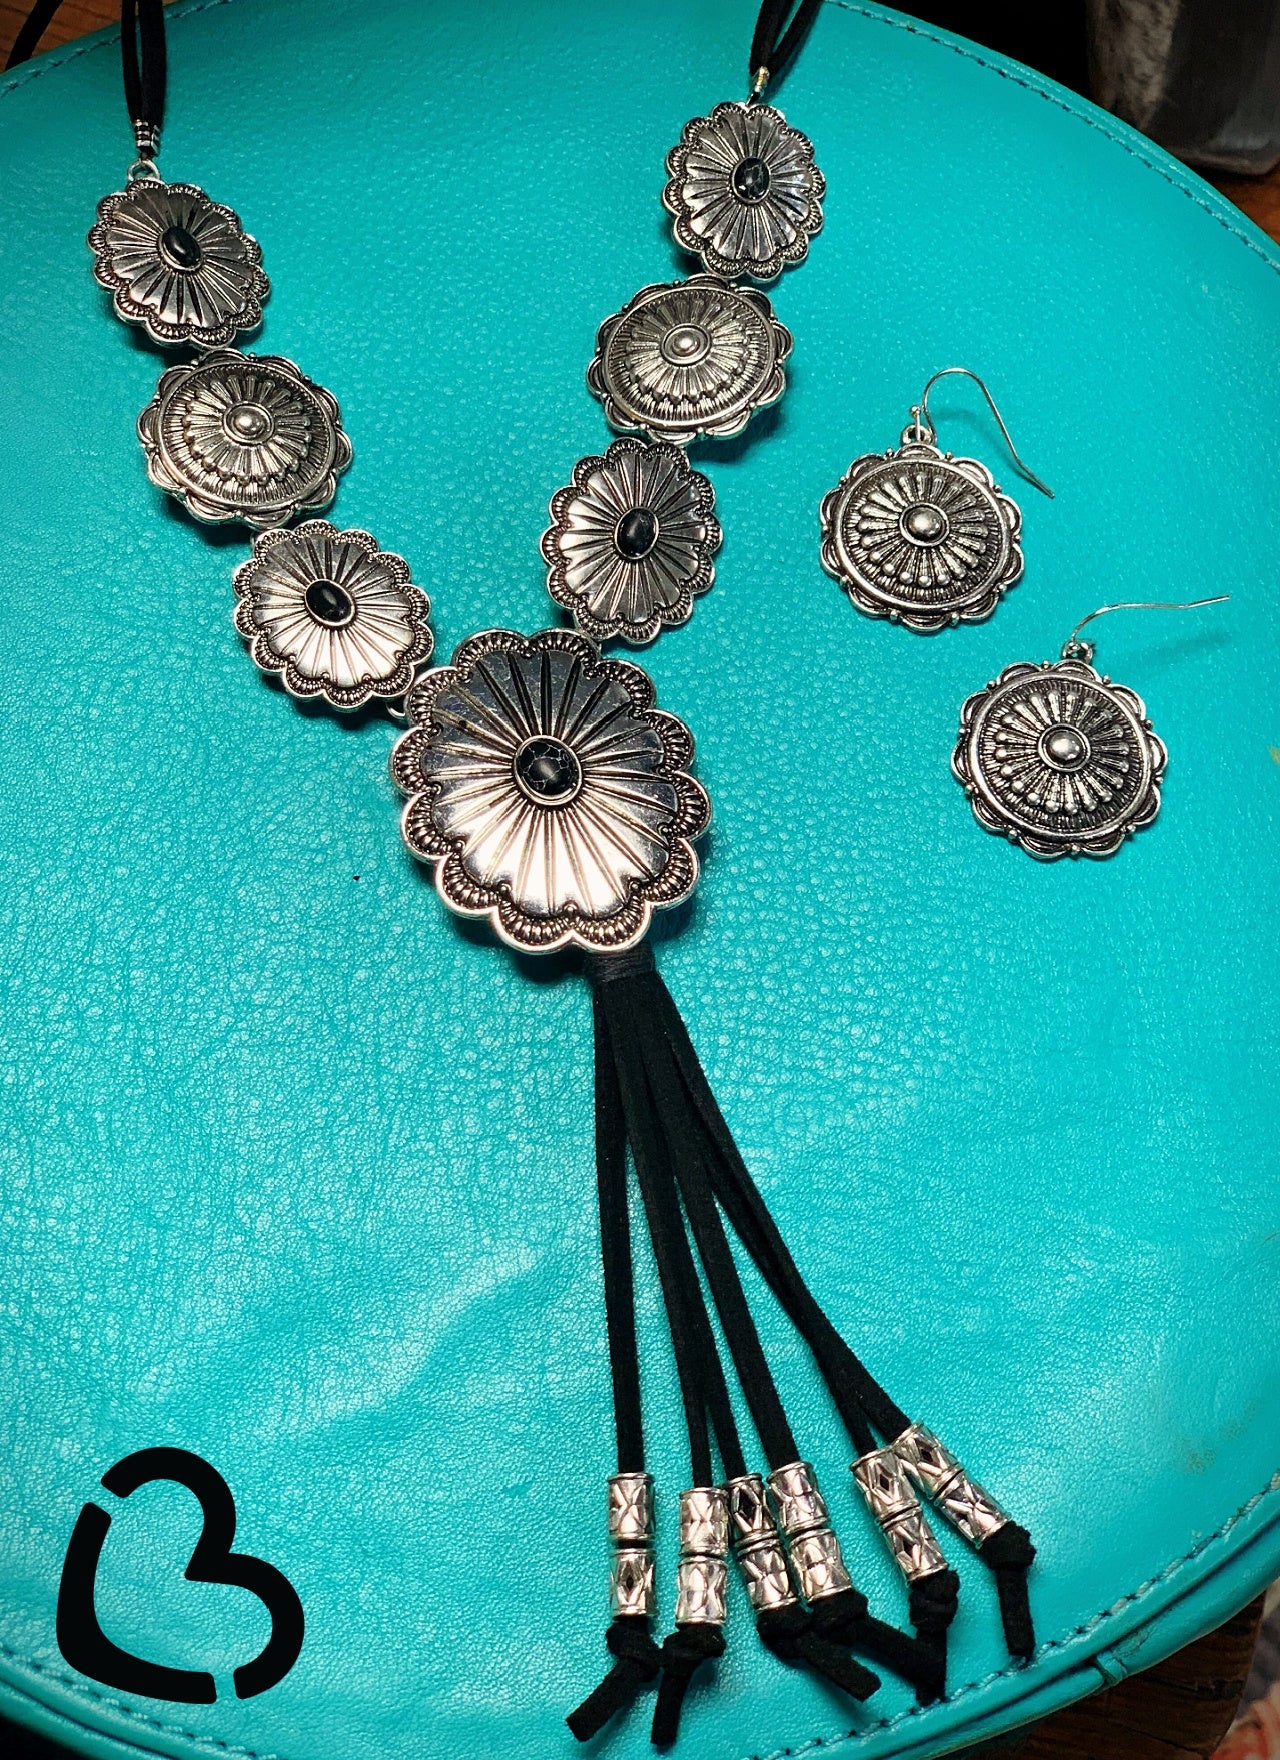 The Atoka Concho Bolo Style Necklace Jewelry 19 